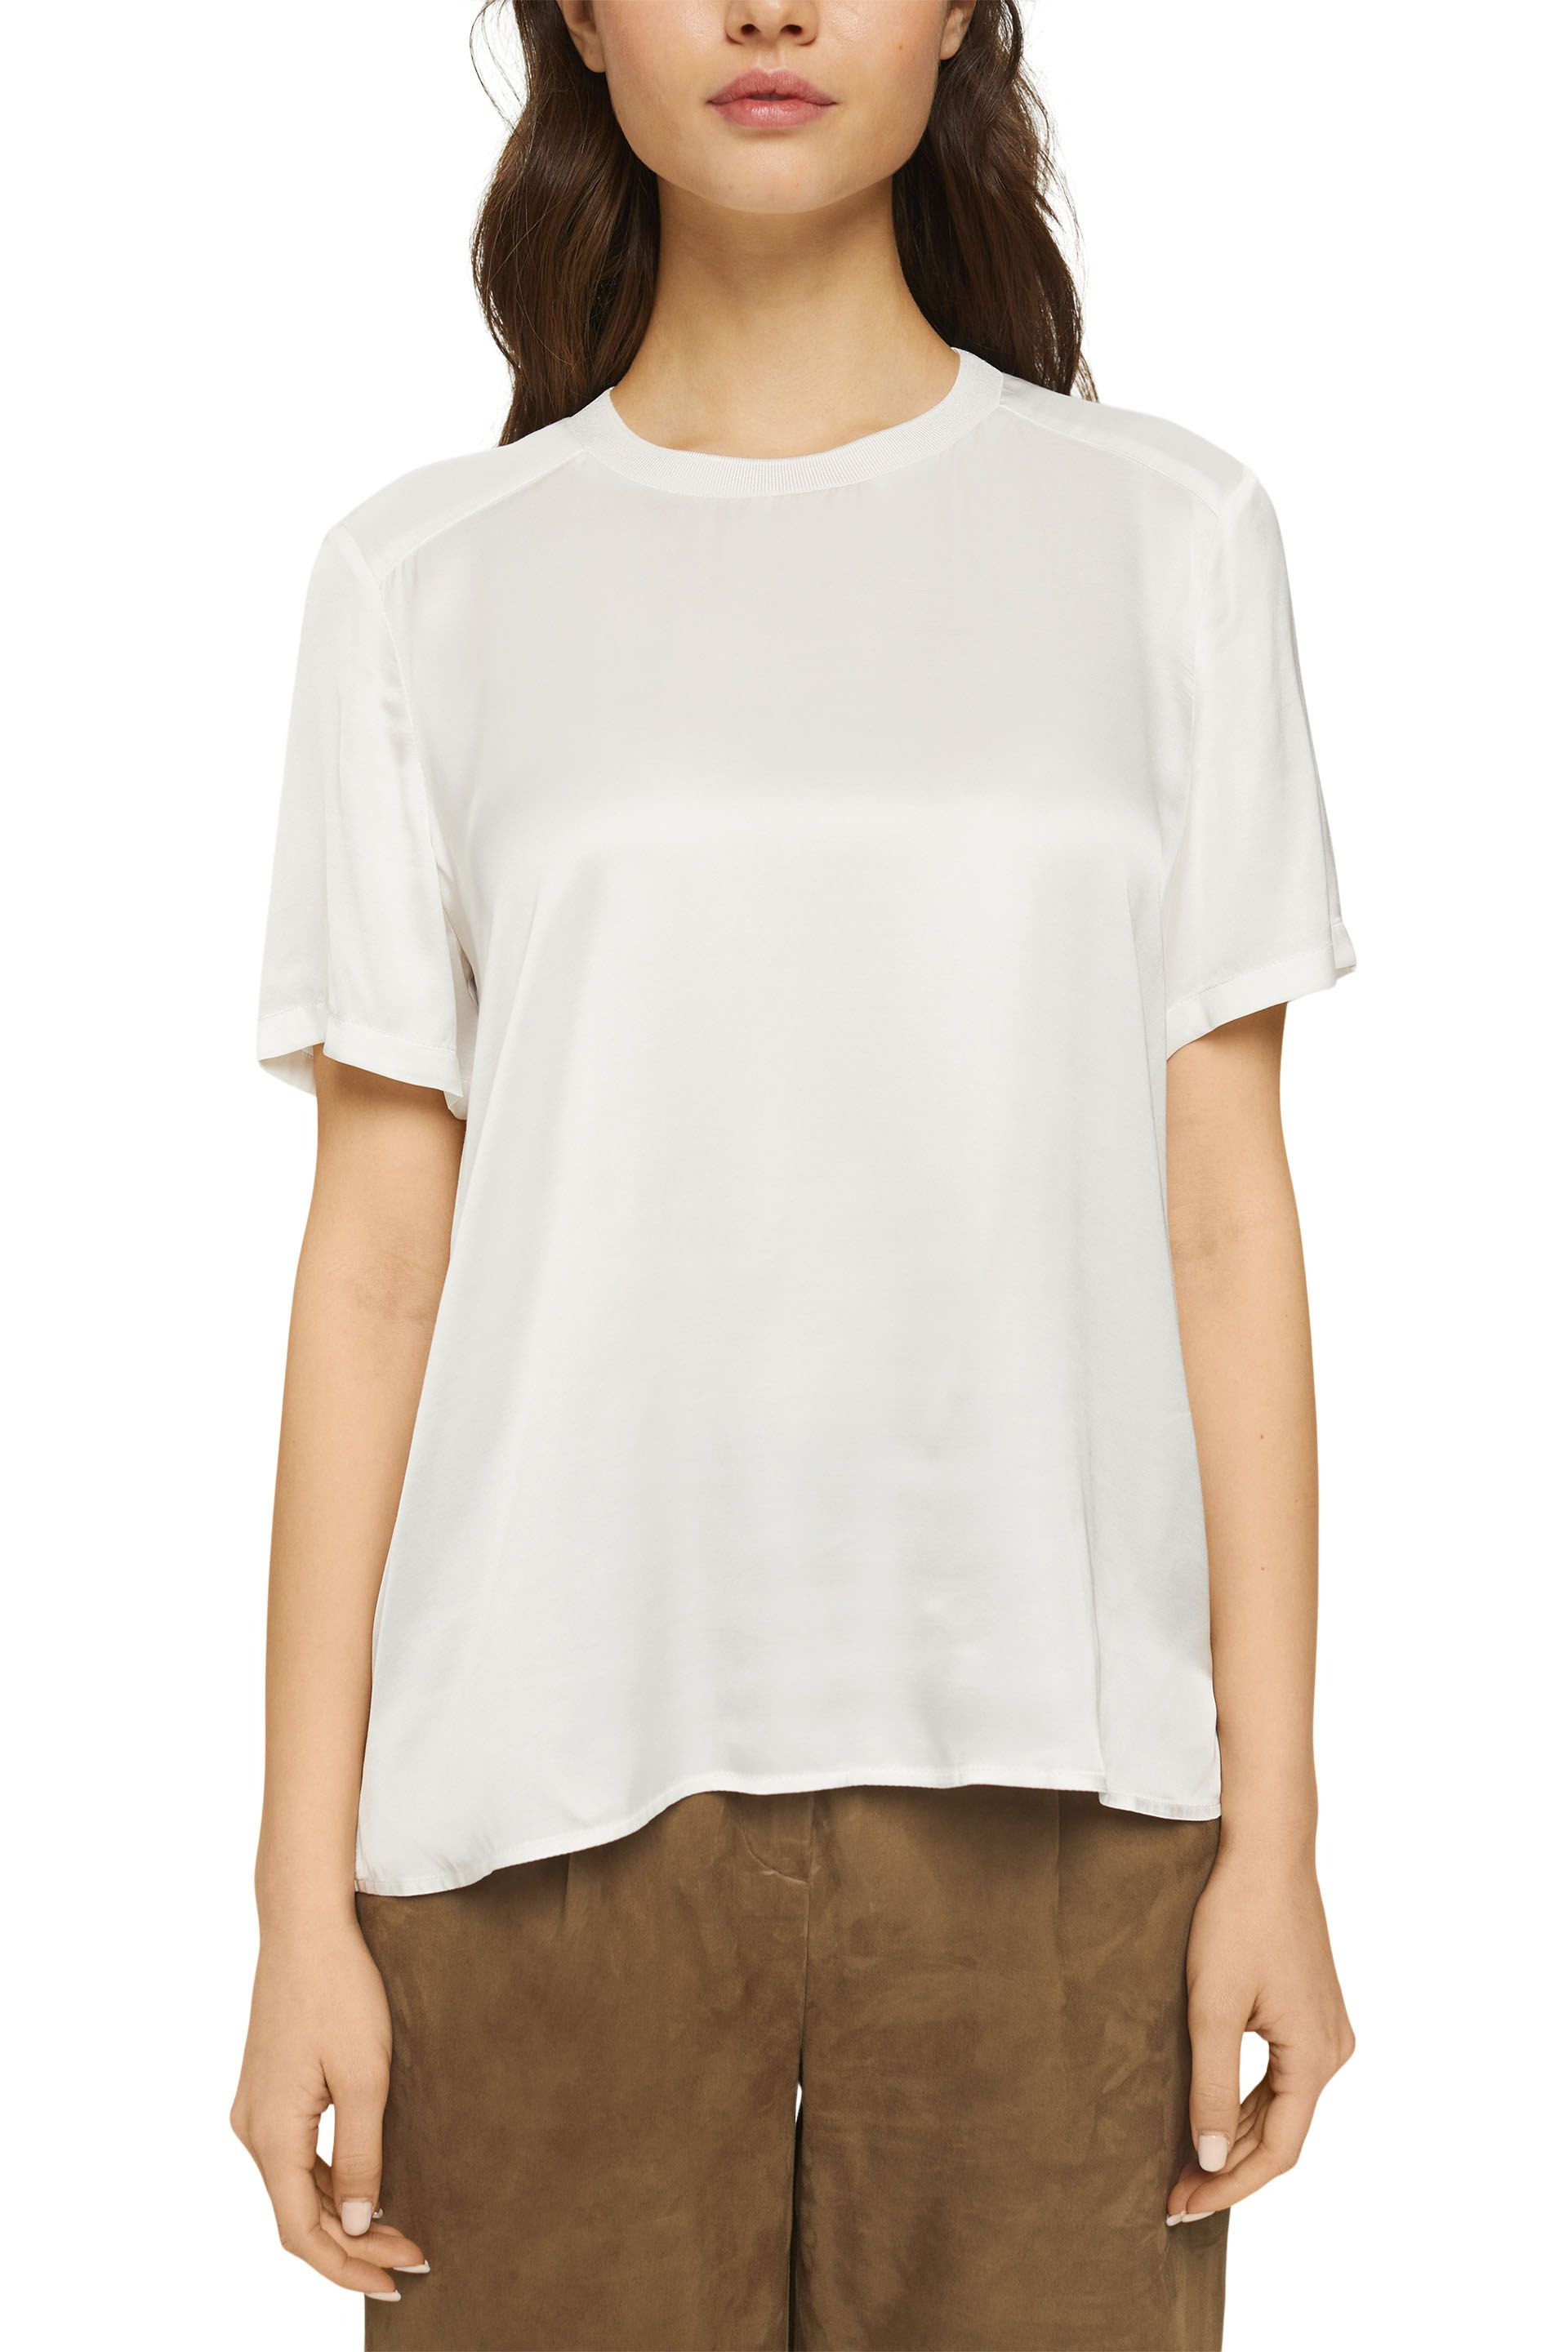 Short-sleeved silk-effect blouse, White, large image number 1